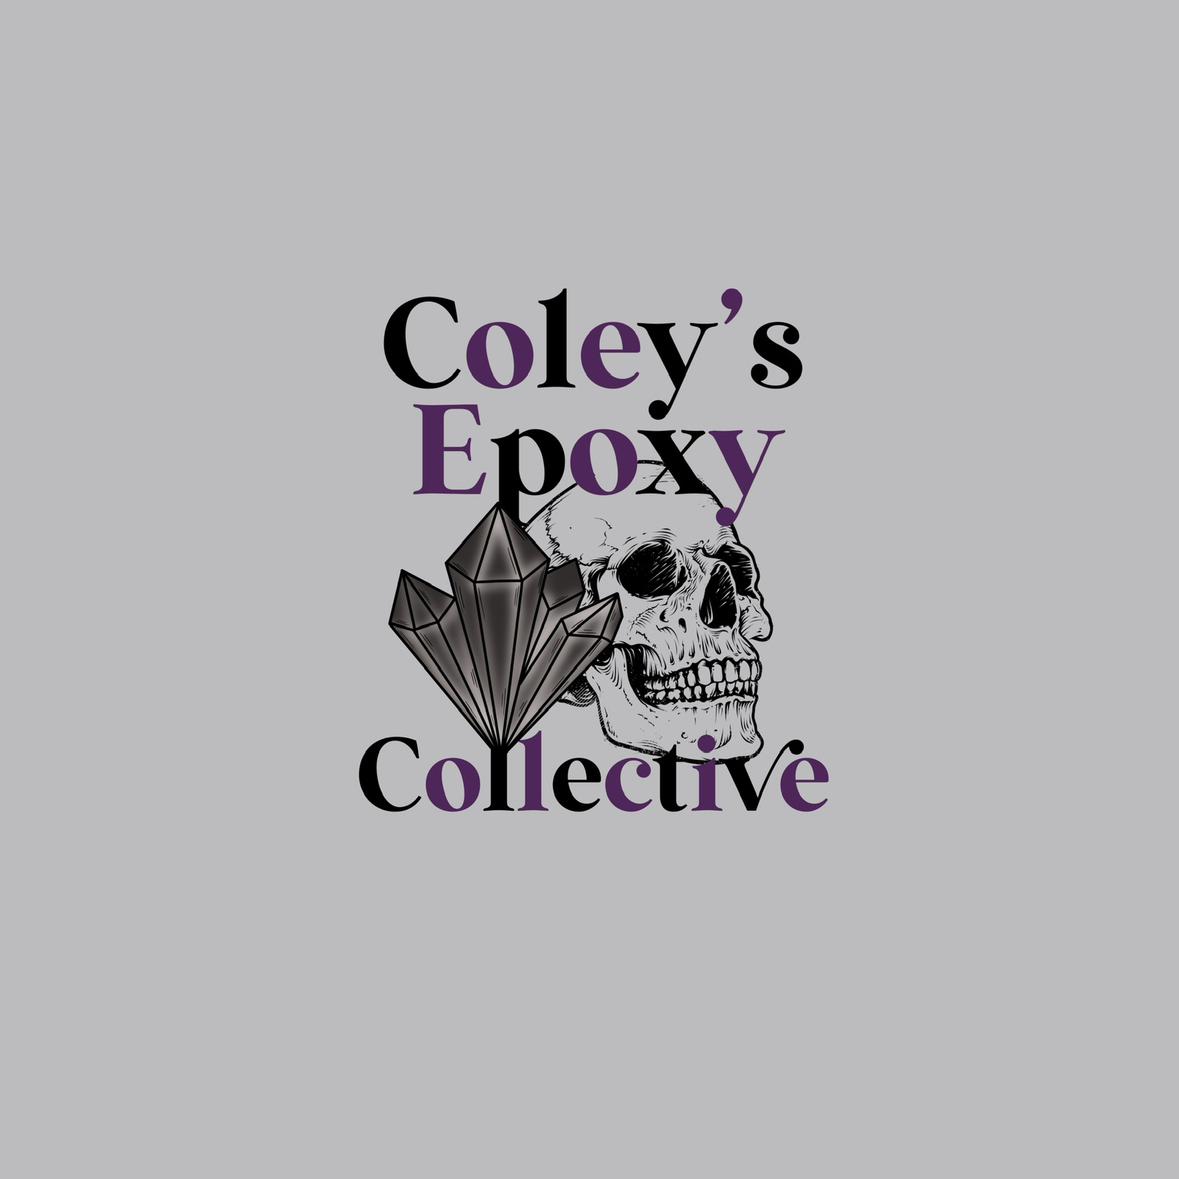 Coleysepoxy's images